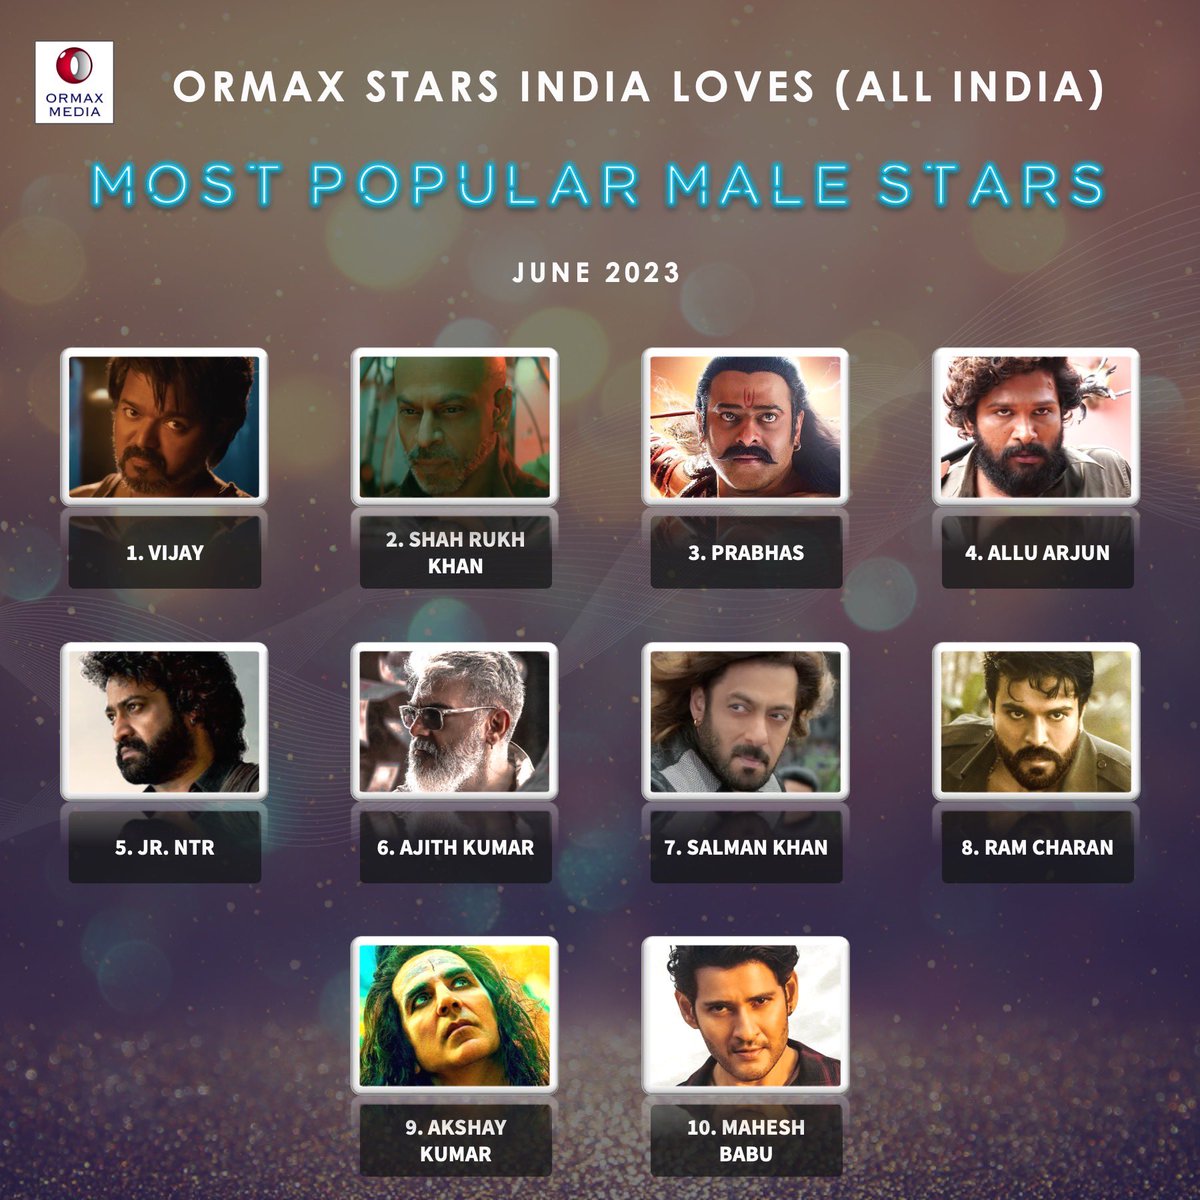 RT @OrmaxMedia: Ormax Stars India Loves: Most popular male film stars in India (Jun 2023) #OrmaxSIL https://t.co/I0e35kOGBm